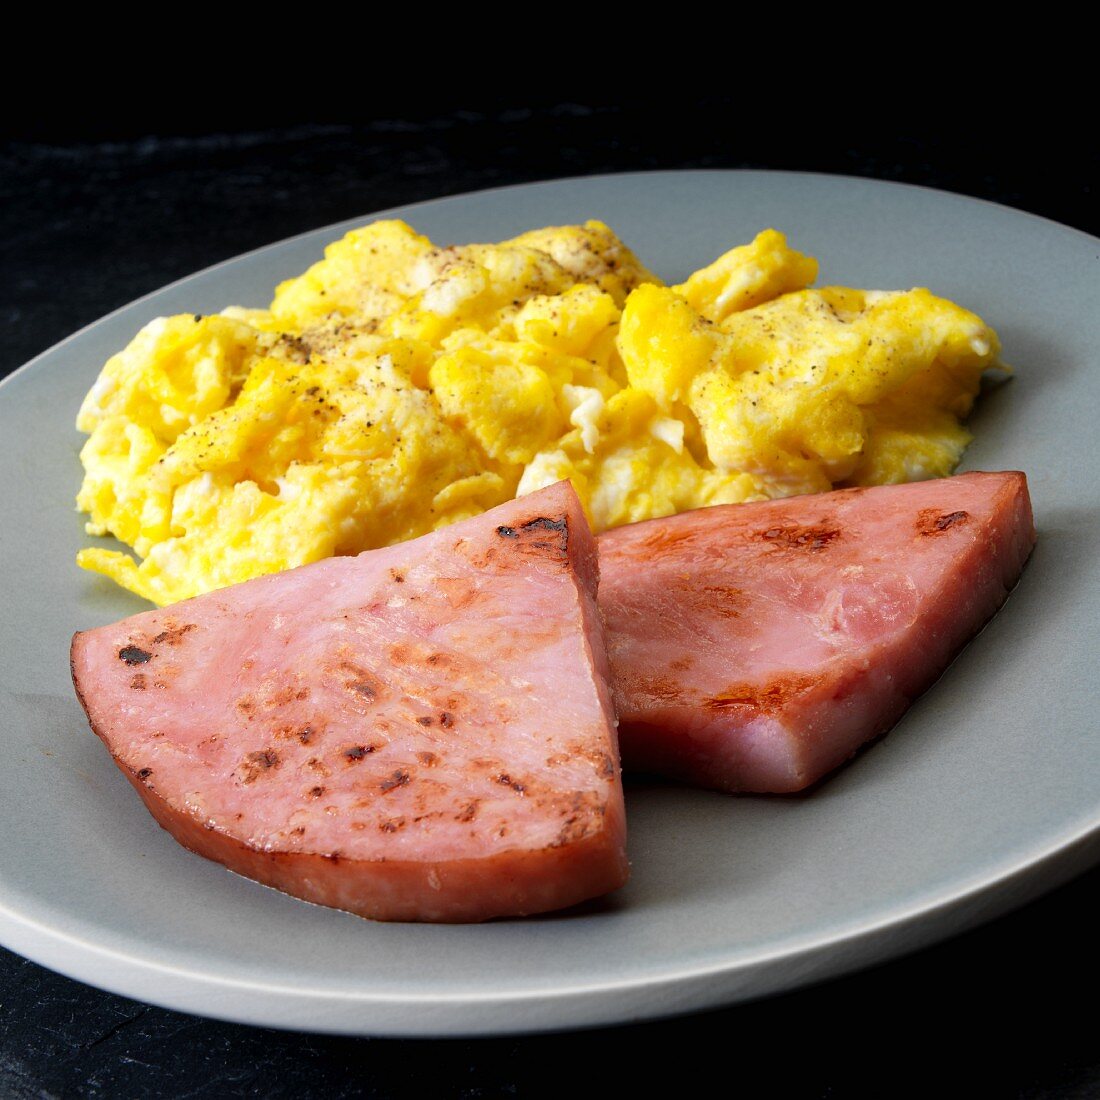 Fried breakfast ham with scrambled eggs